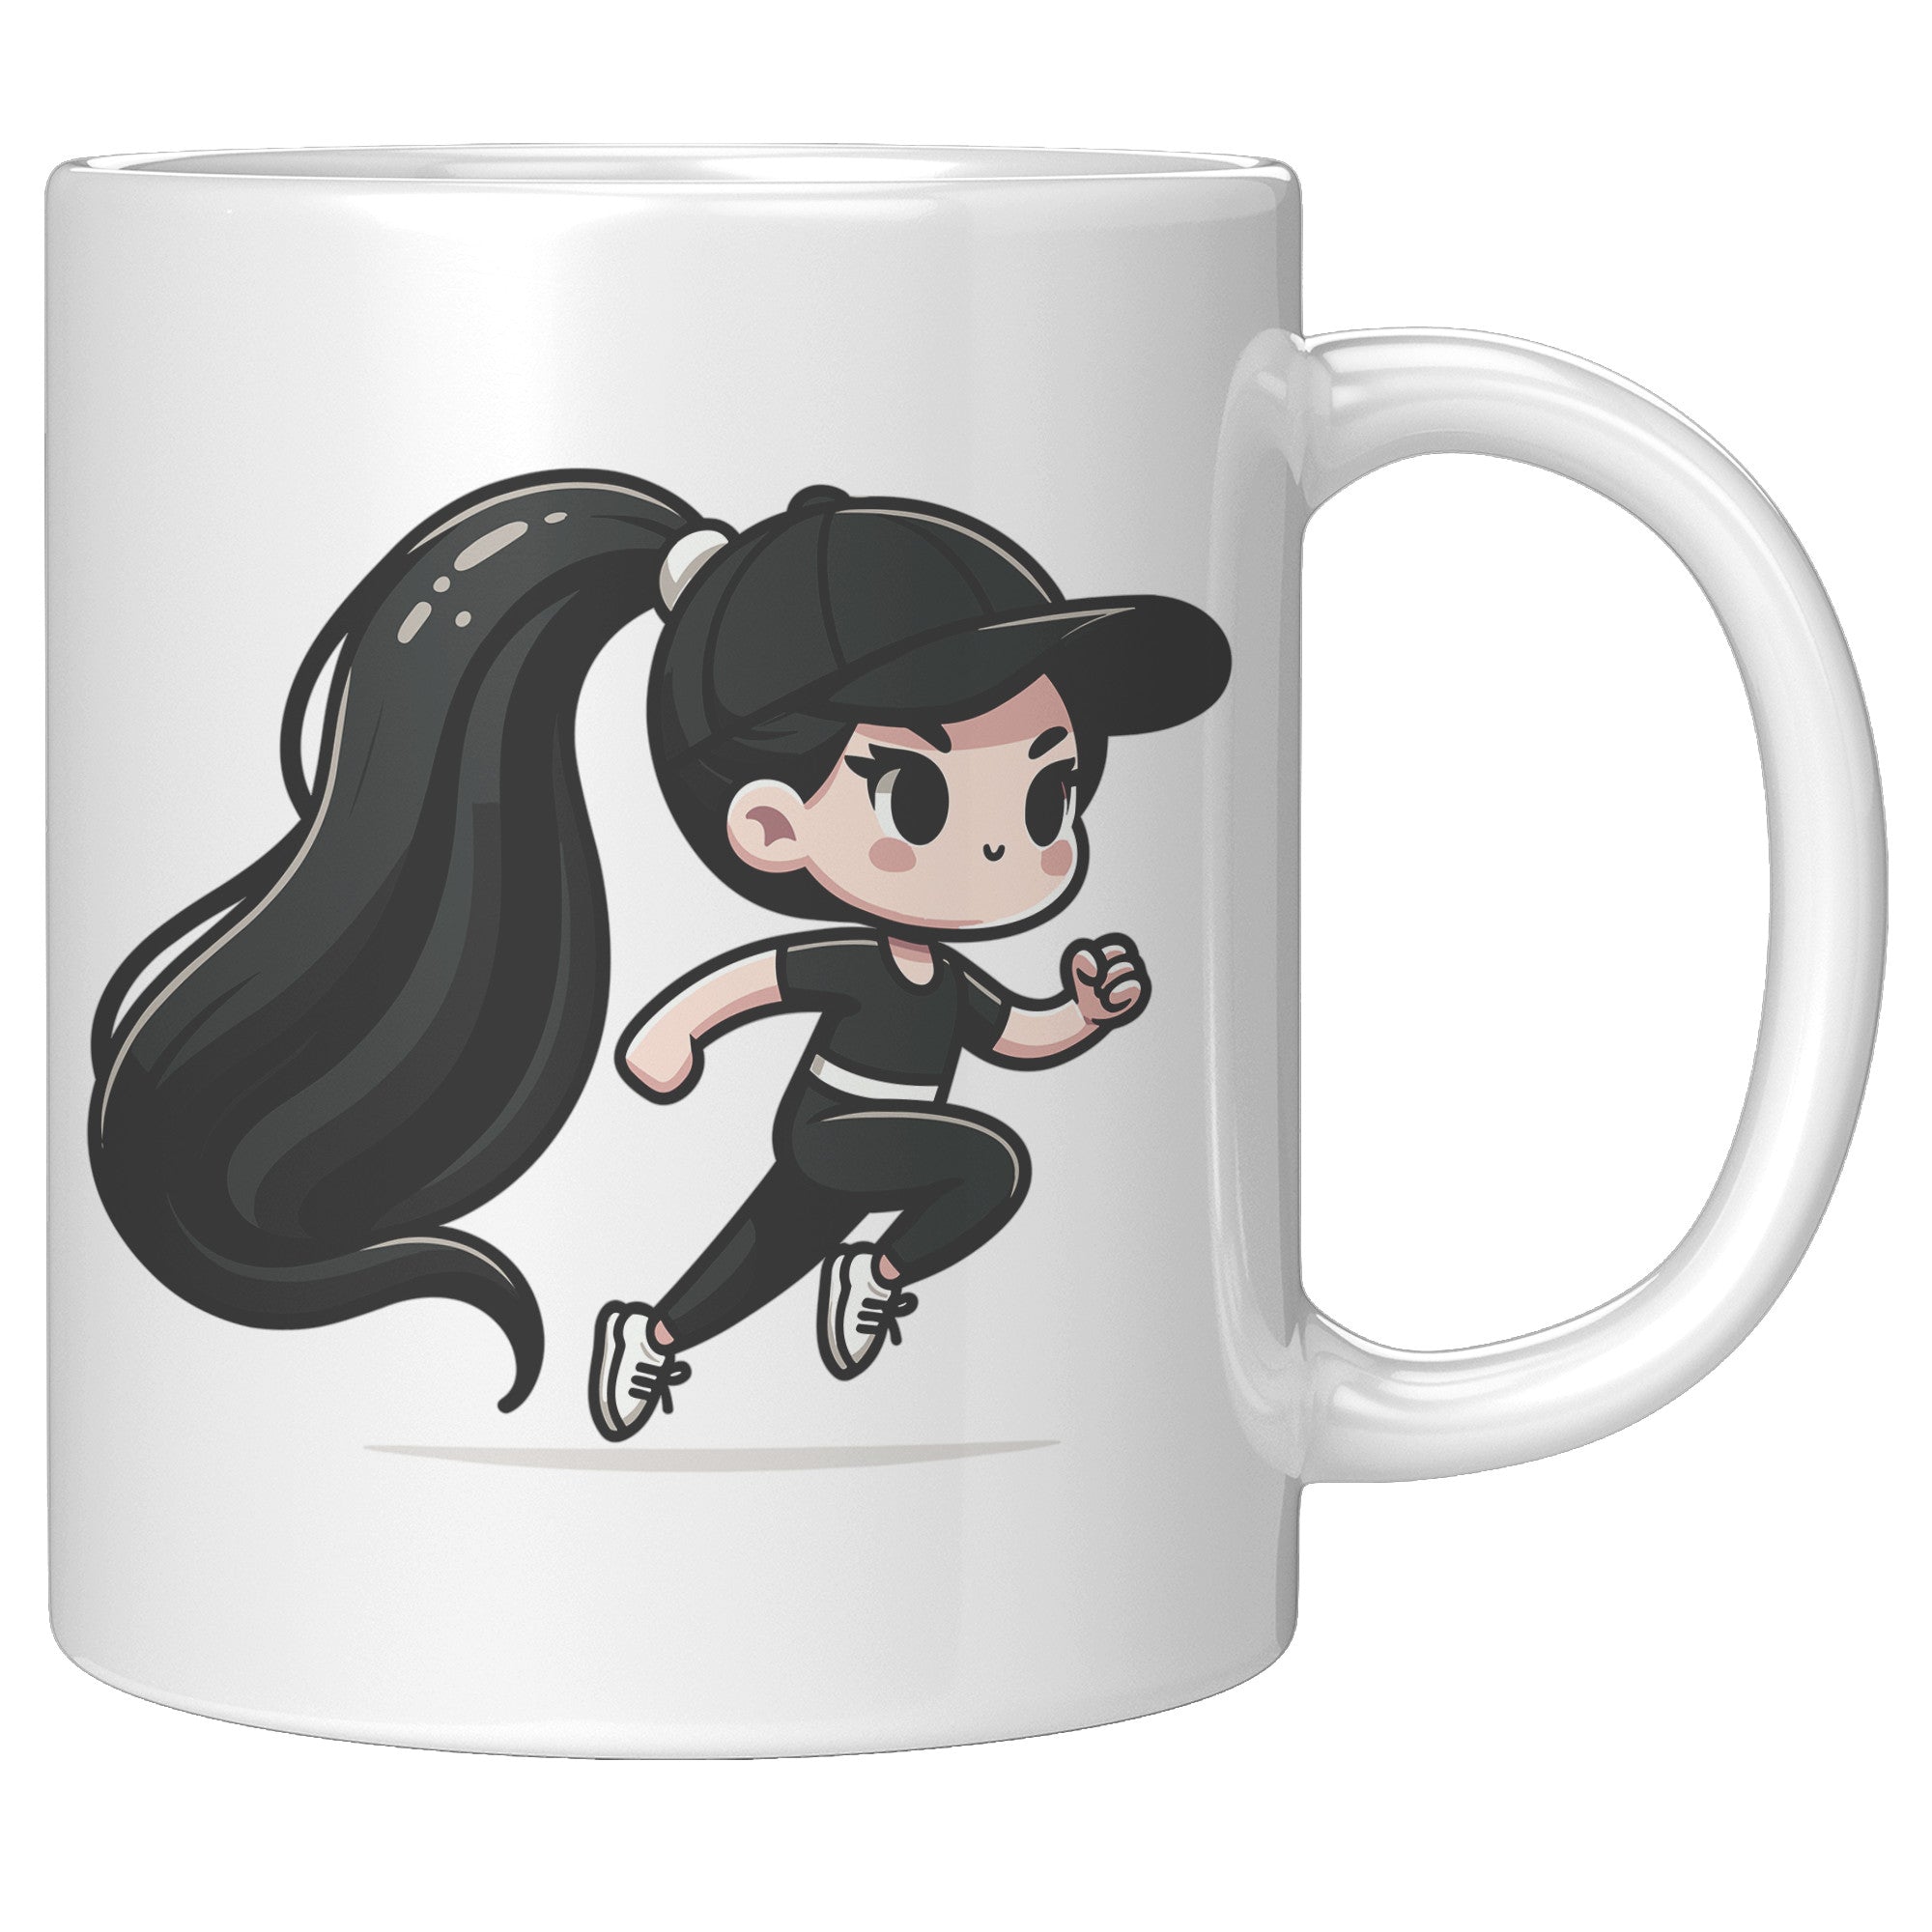 "Female Runner Coffee Mug - Inspirational Running Quotes Cup - Perfect Gift for Women Runners - Motivational Marathoner's Morning Brew" - G